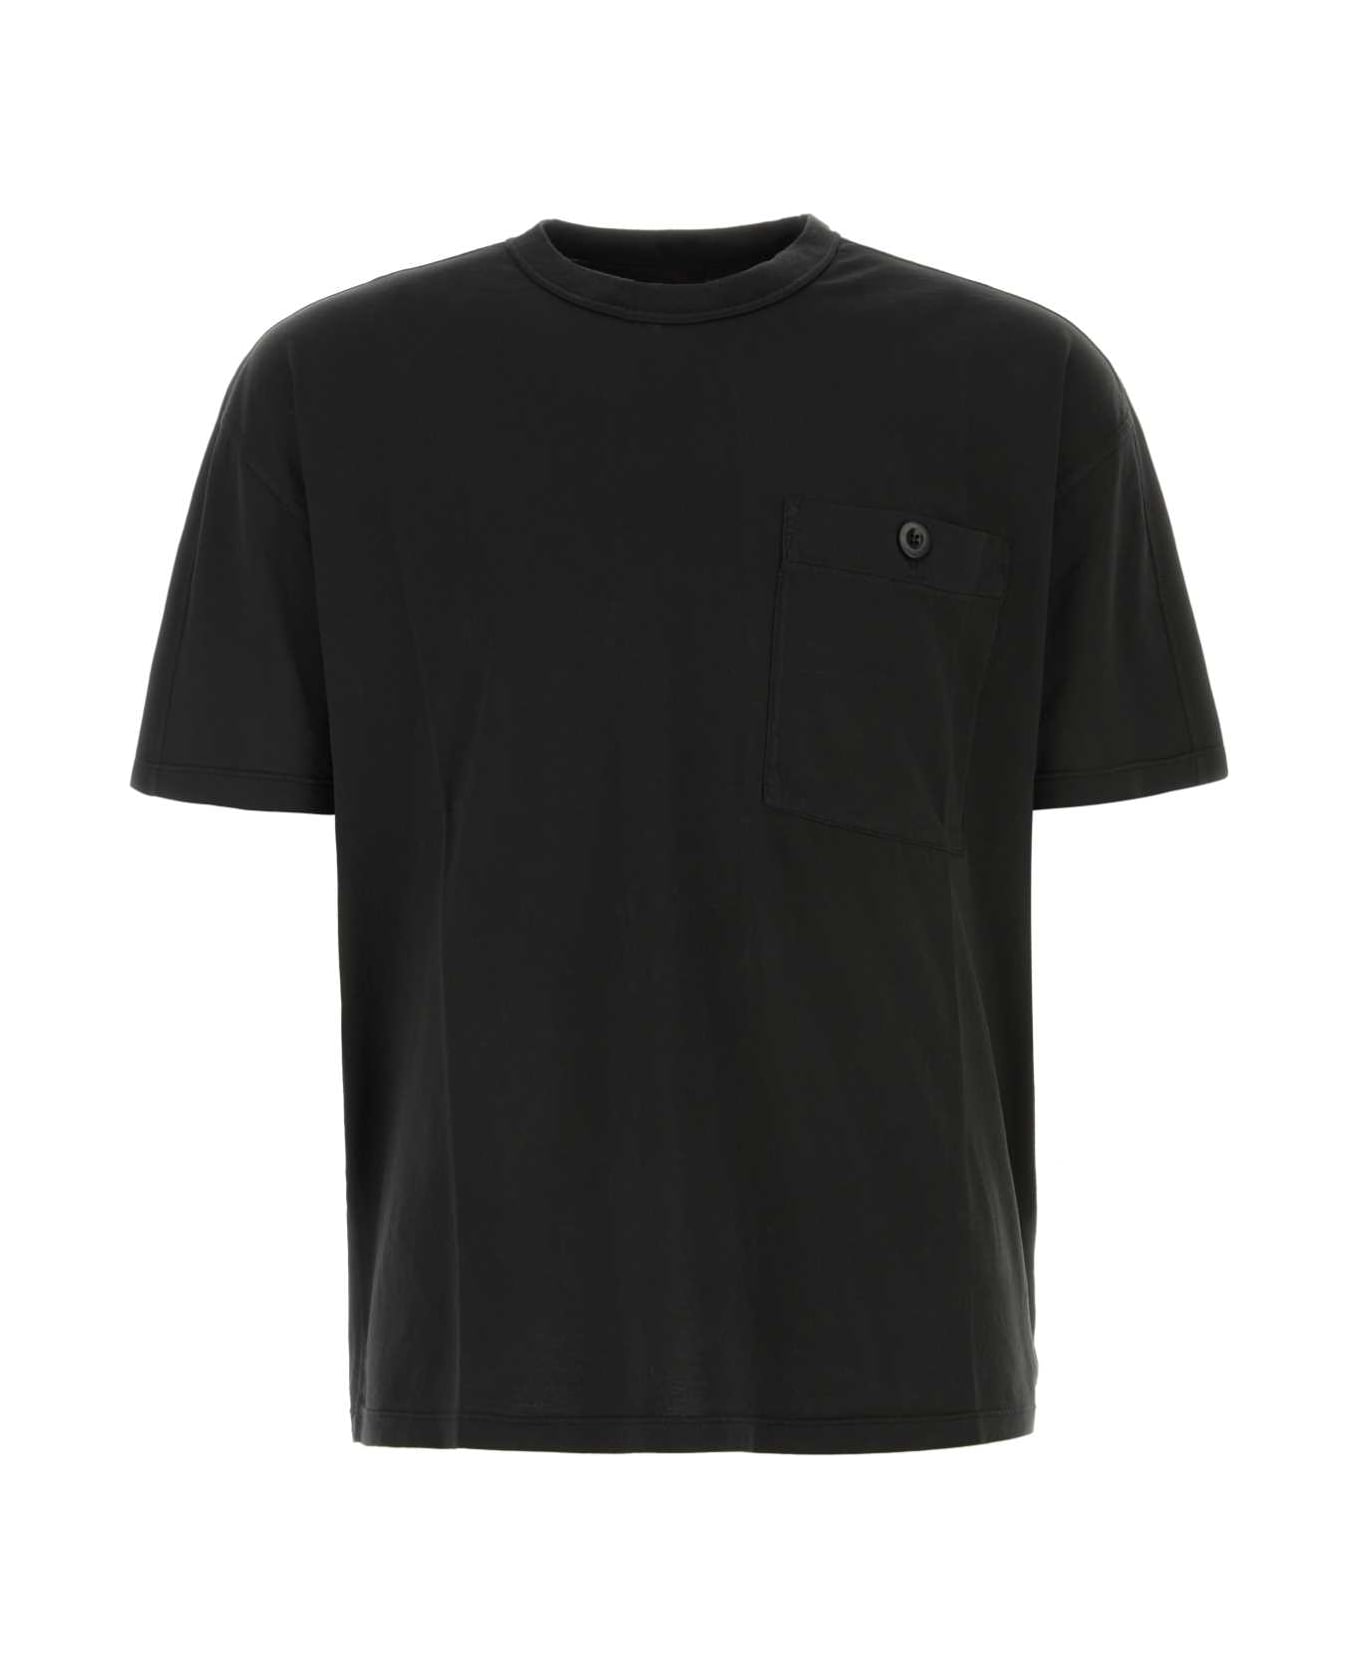 Ten C Black Cotton T-shirt - Black